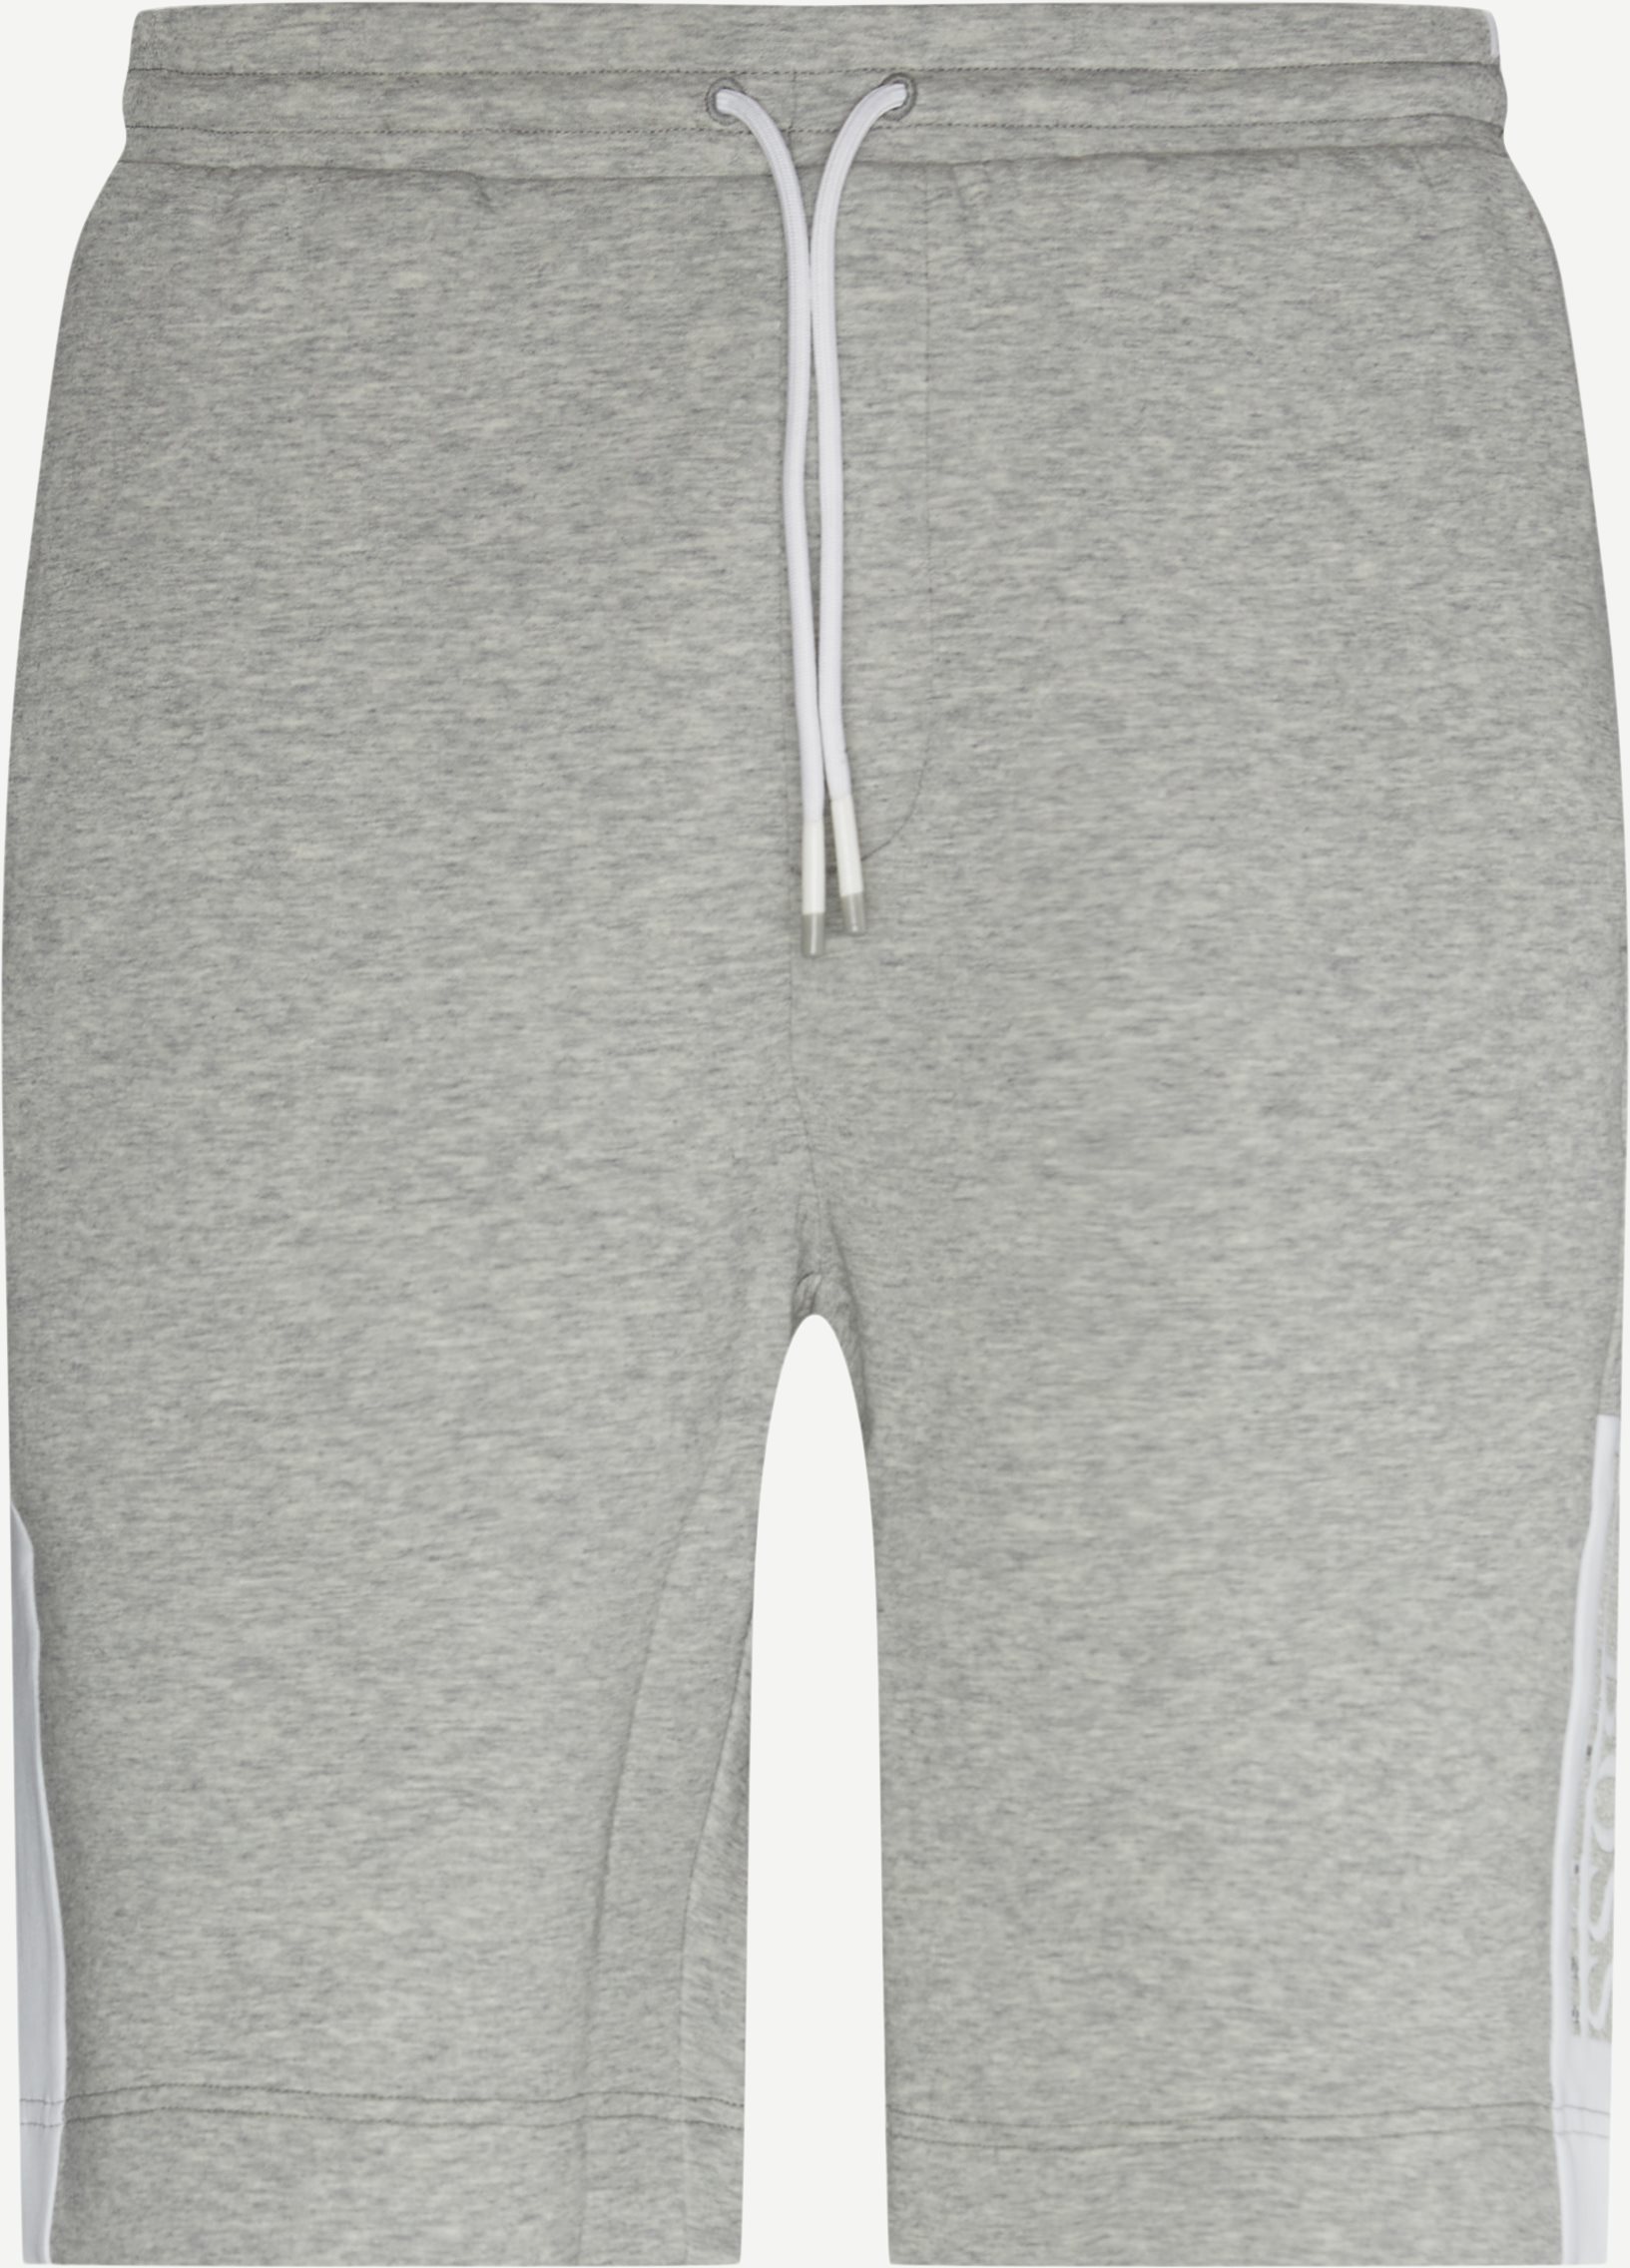 Headlo Sweatshorts - Shorts - Regular fit - Grey